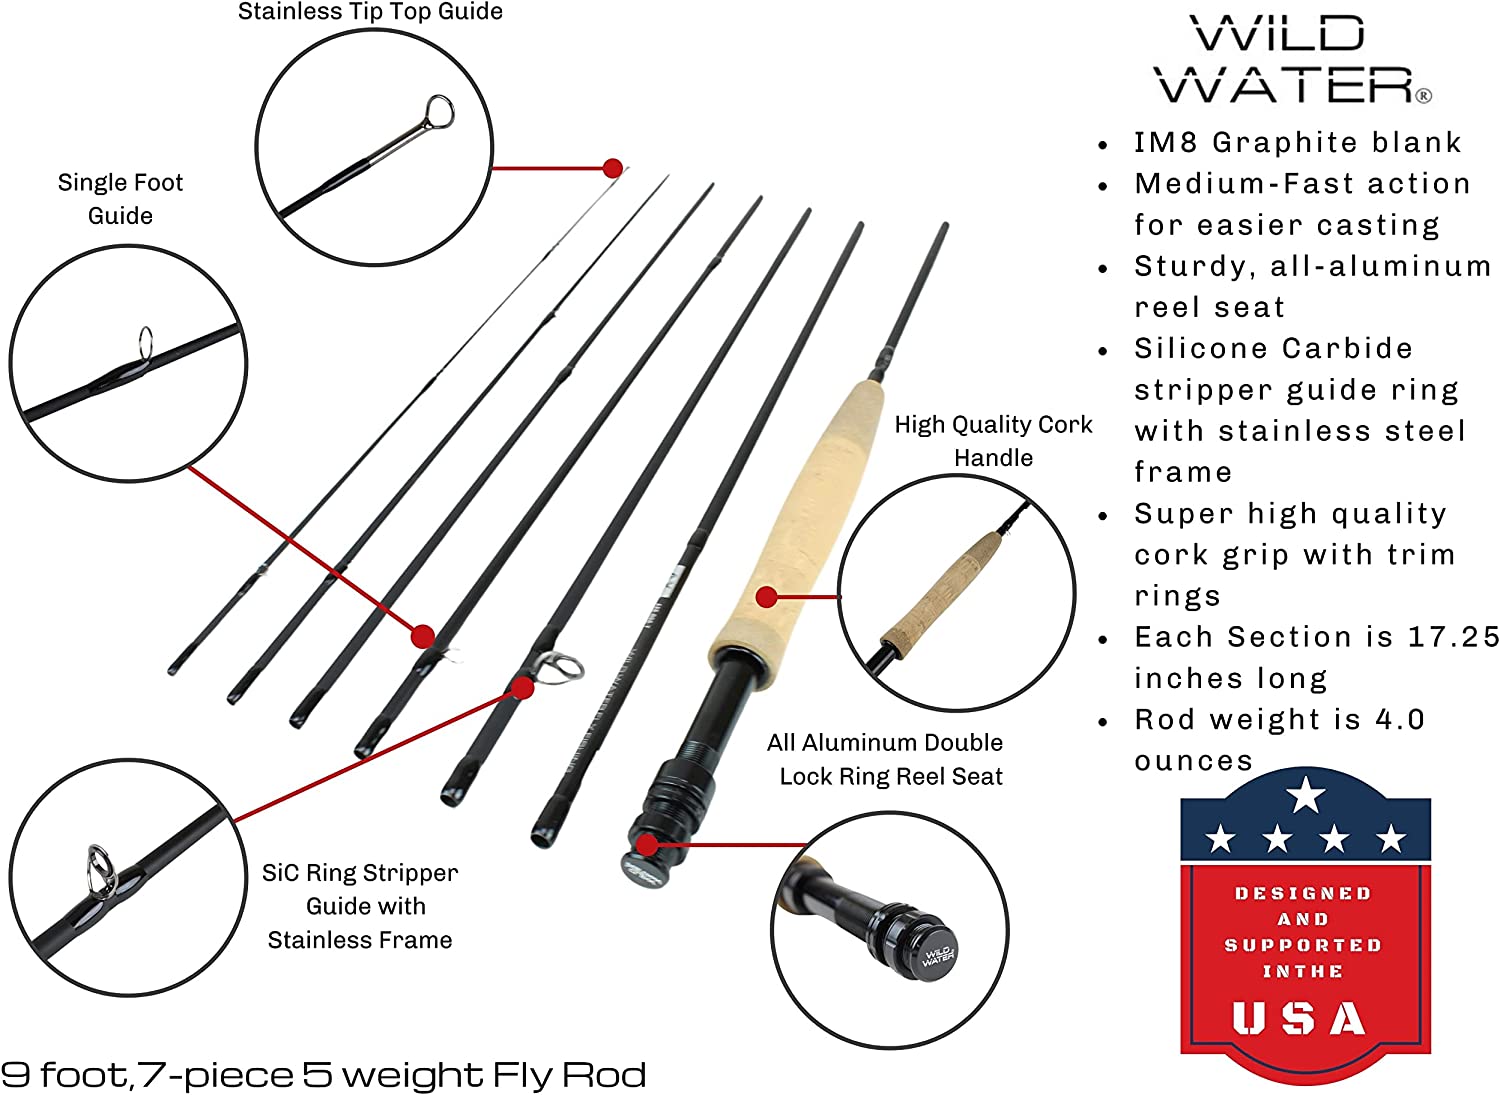 Wild Water Standard Fly Fishing Kit, 9 ft 5 wt 7 Piece Rod